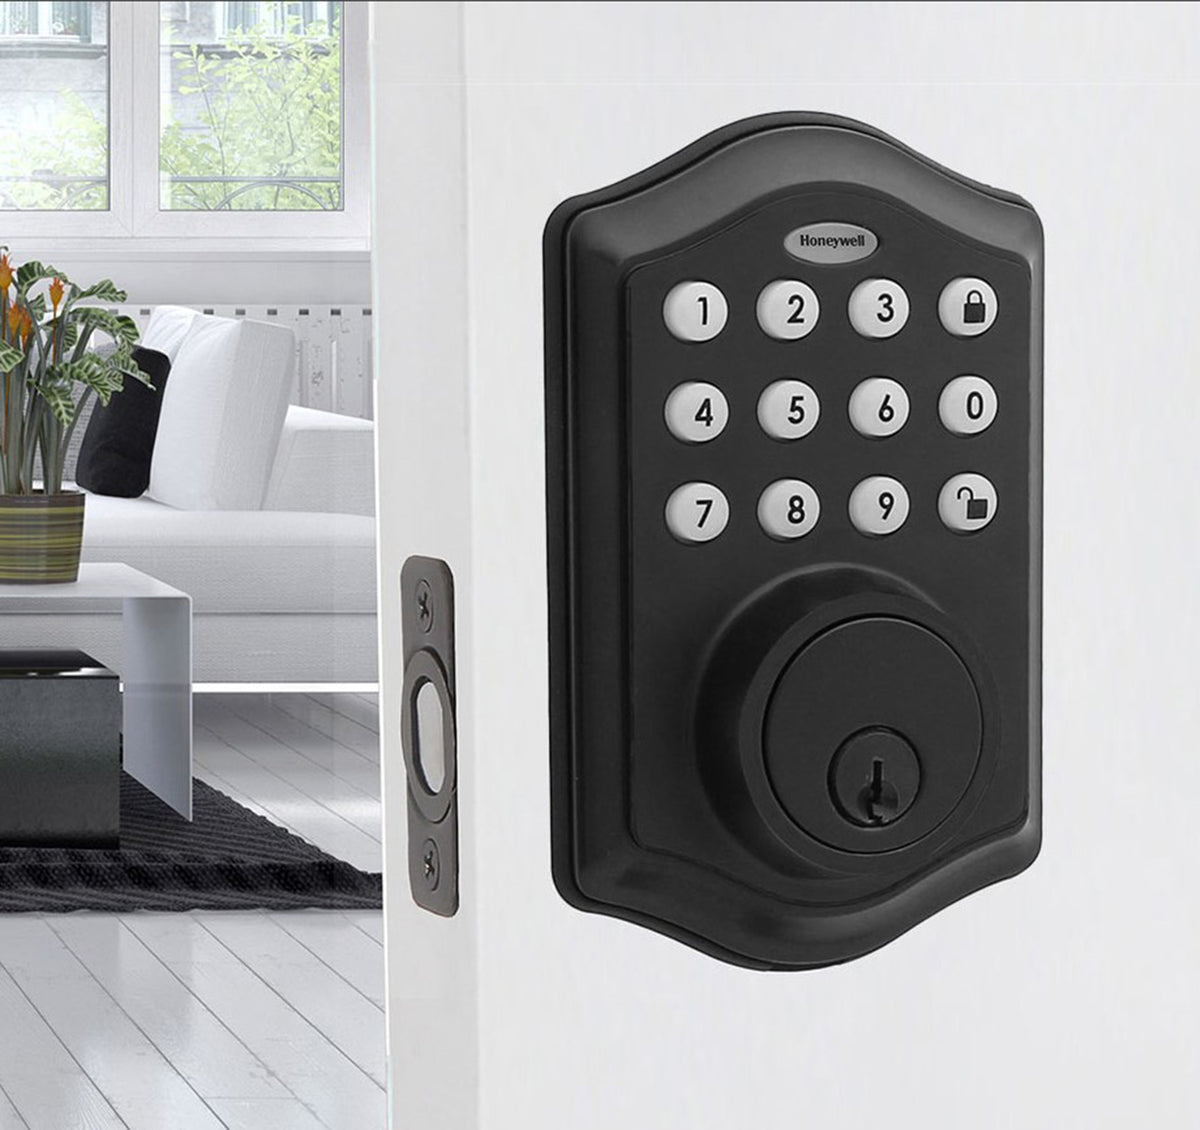 Honeywell 8712509 Electronic Deadbolt Door Lock with Keypad in Matte Black Lifestyle